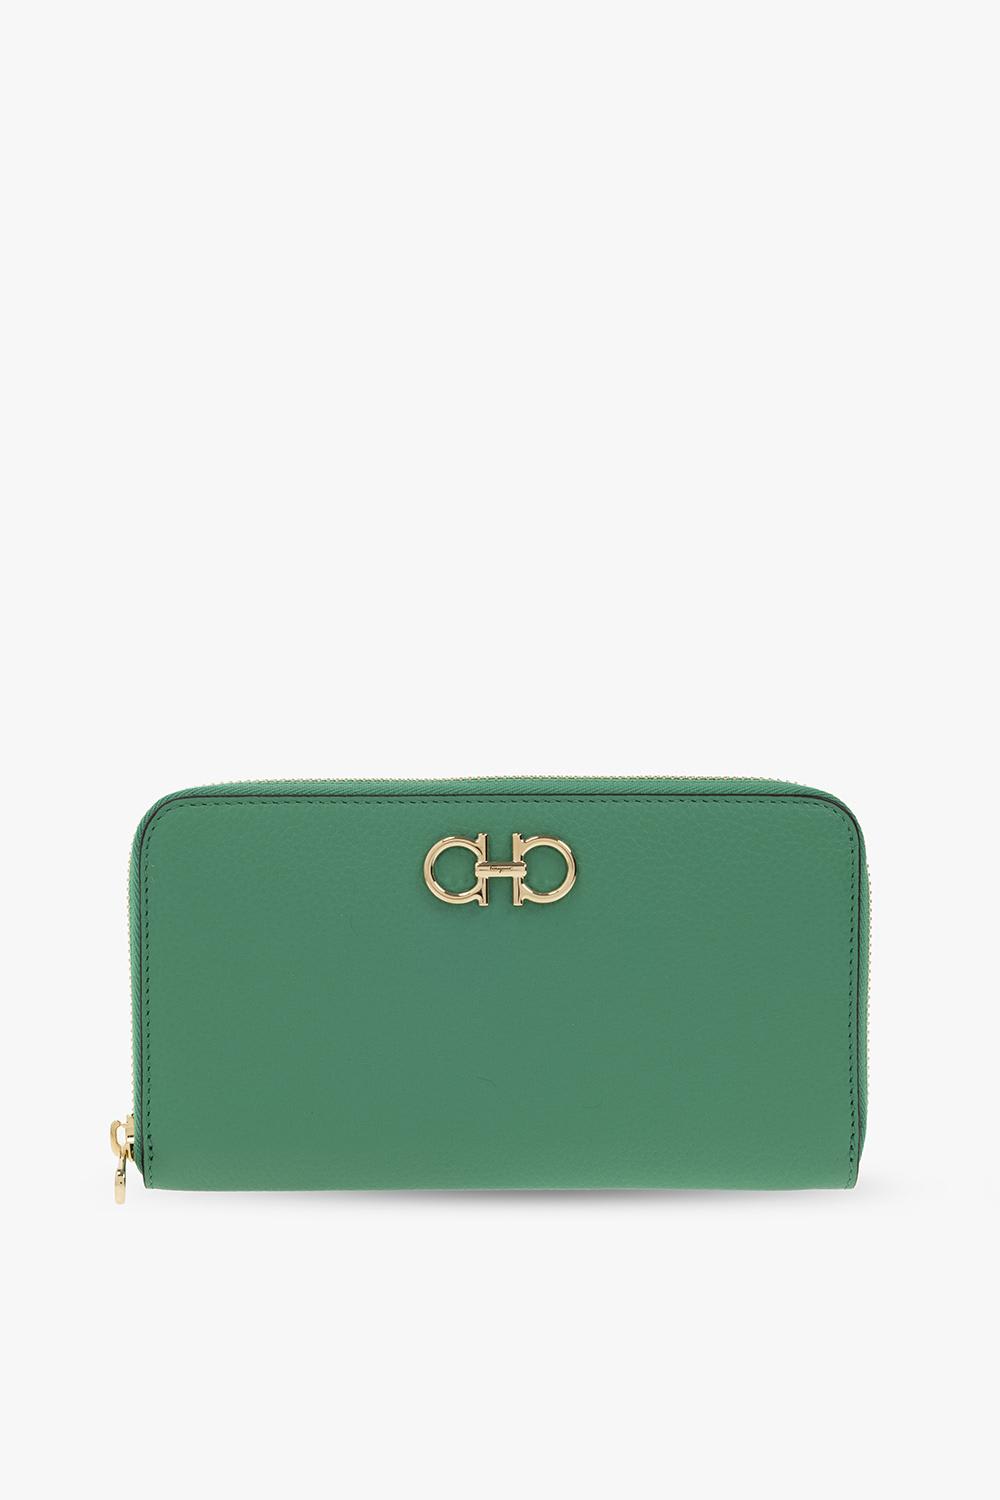 Ferragamo Leather Wallet With Logo In Green